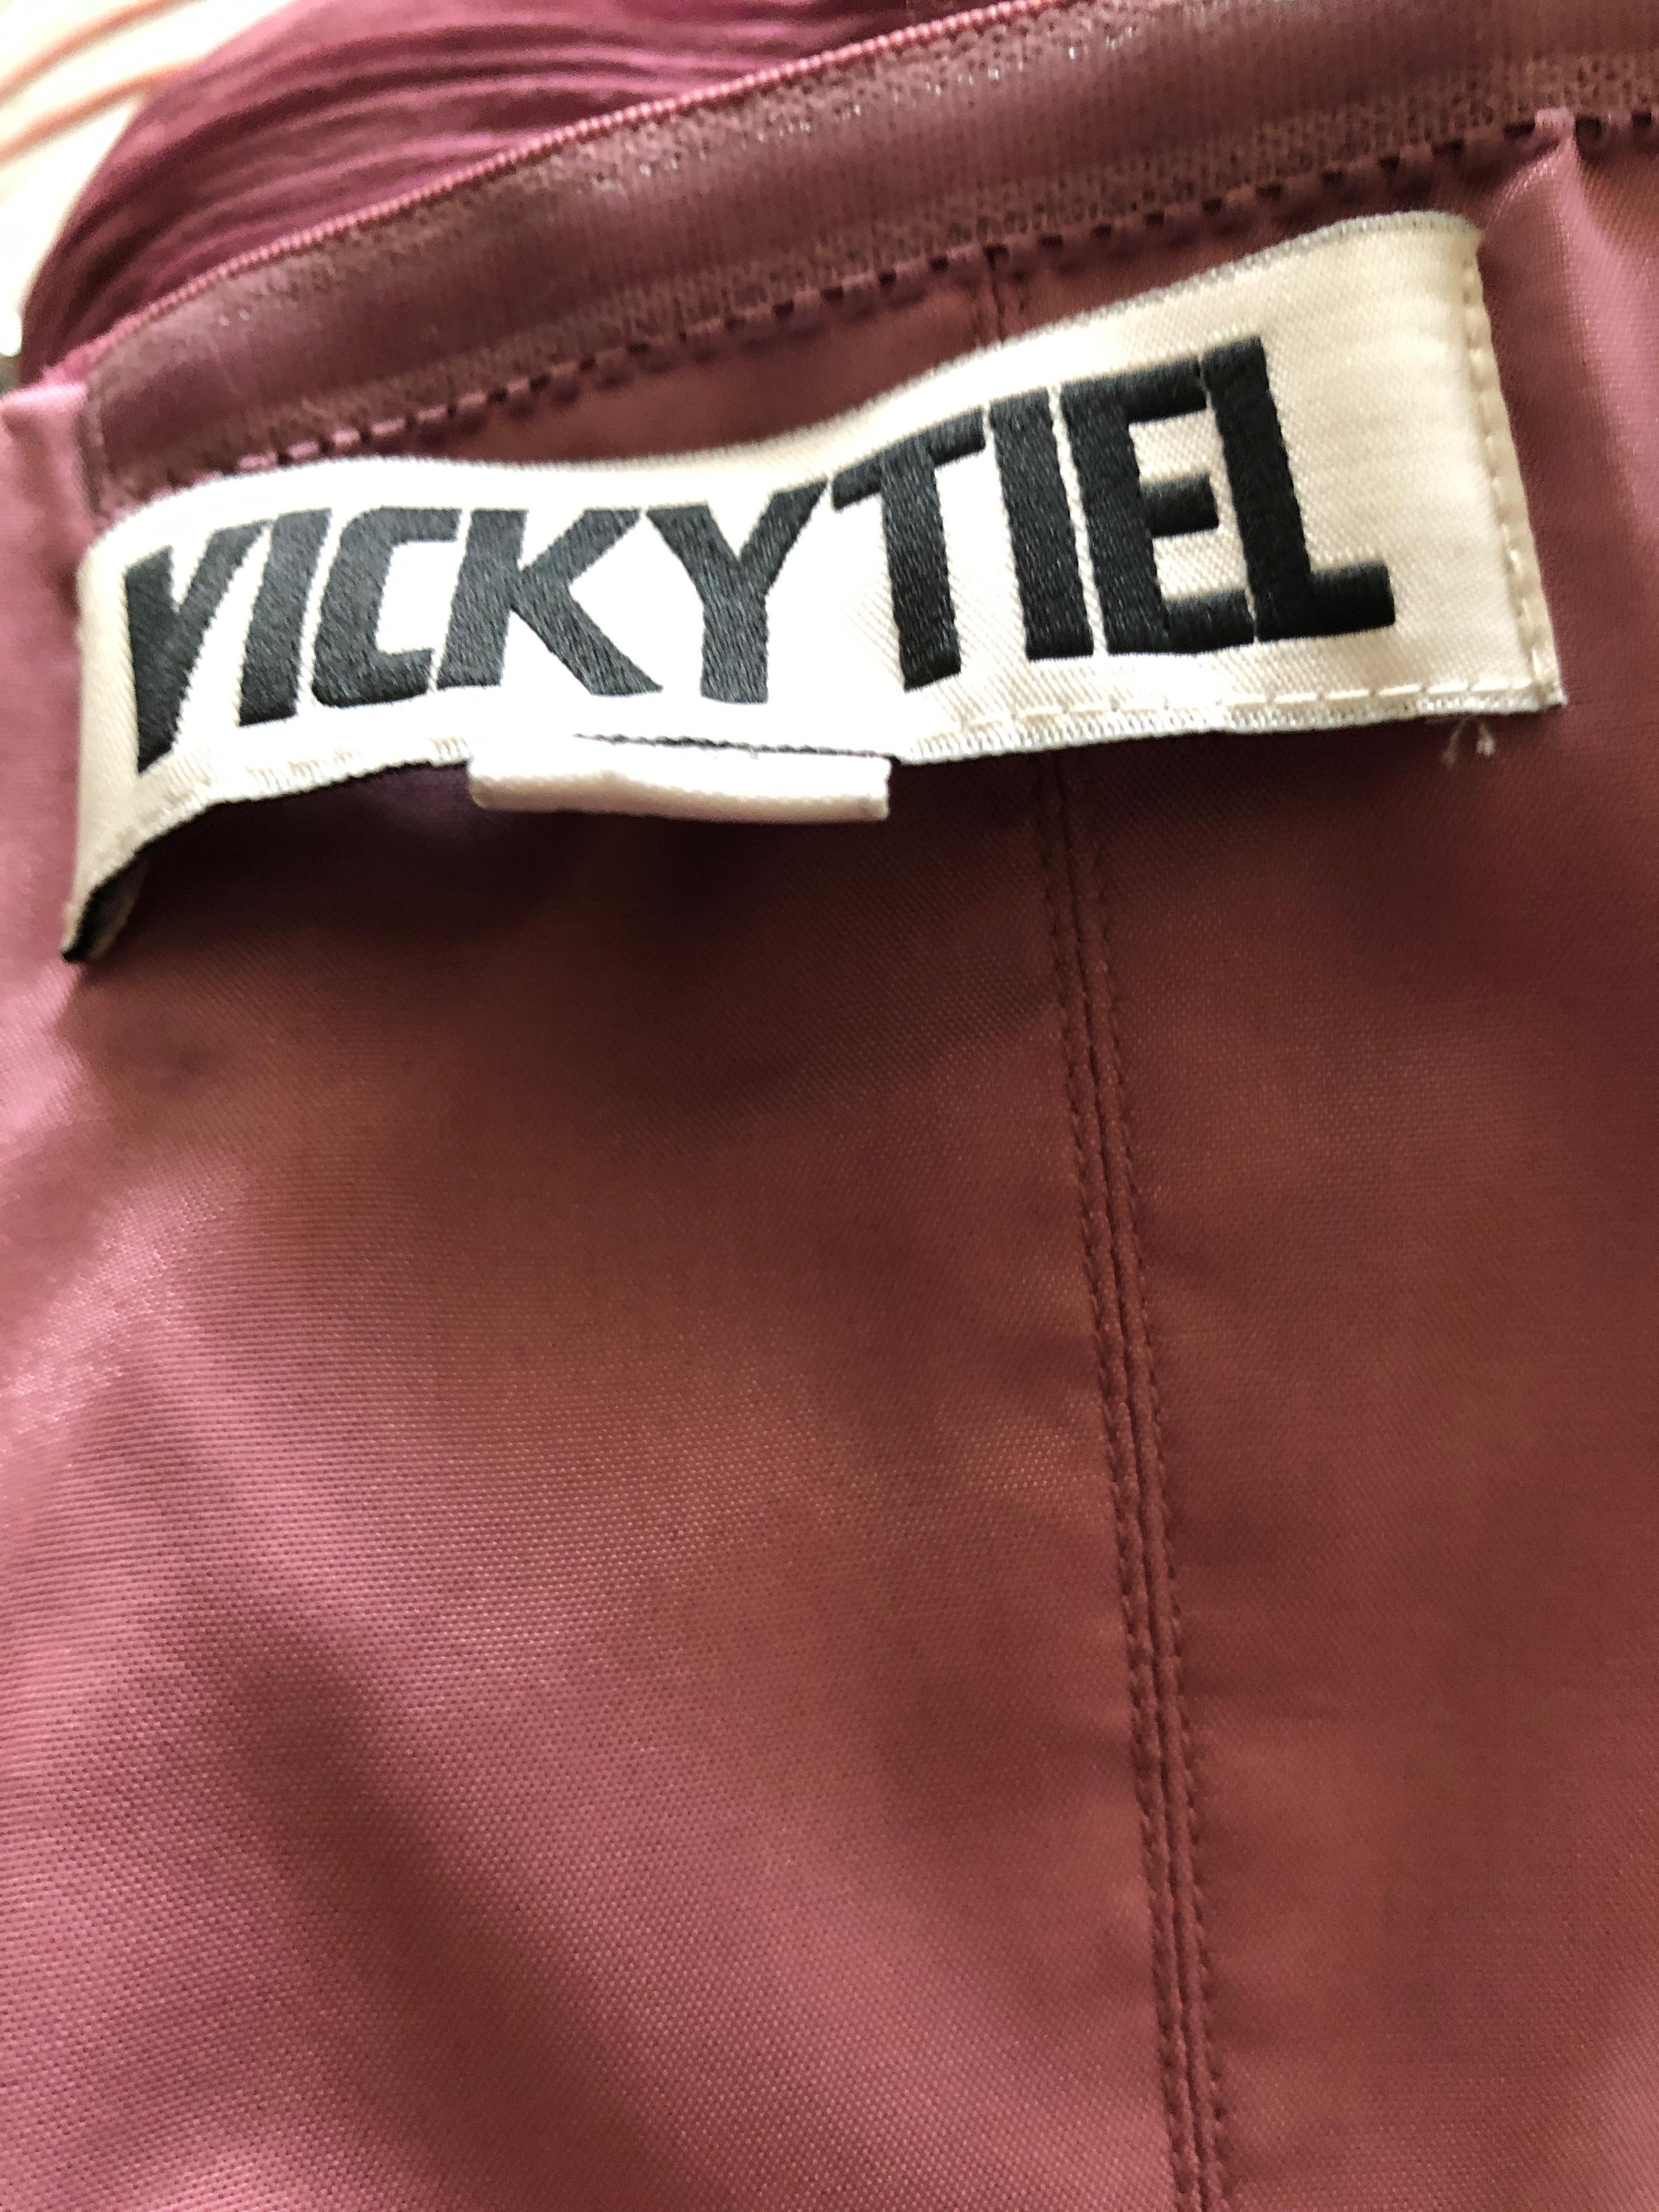 Vicky Tiel Paris 80's Lavender Pink Strapless Sequin Corseted Evening Dress Sz 4 5